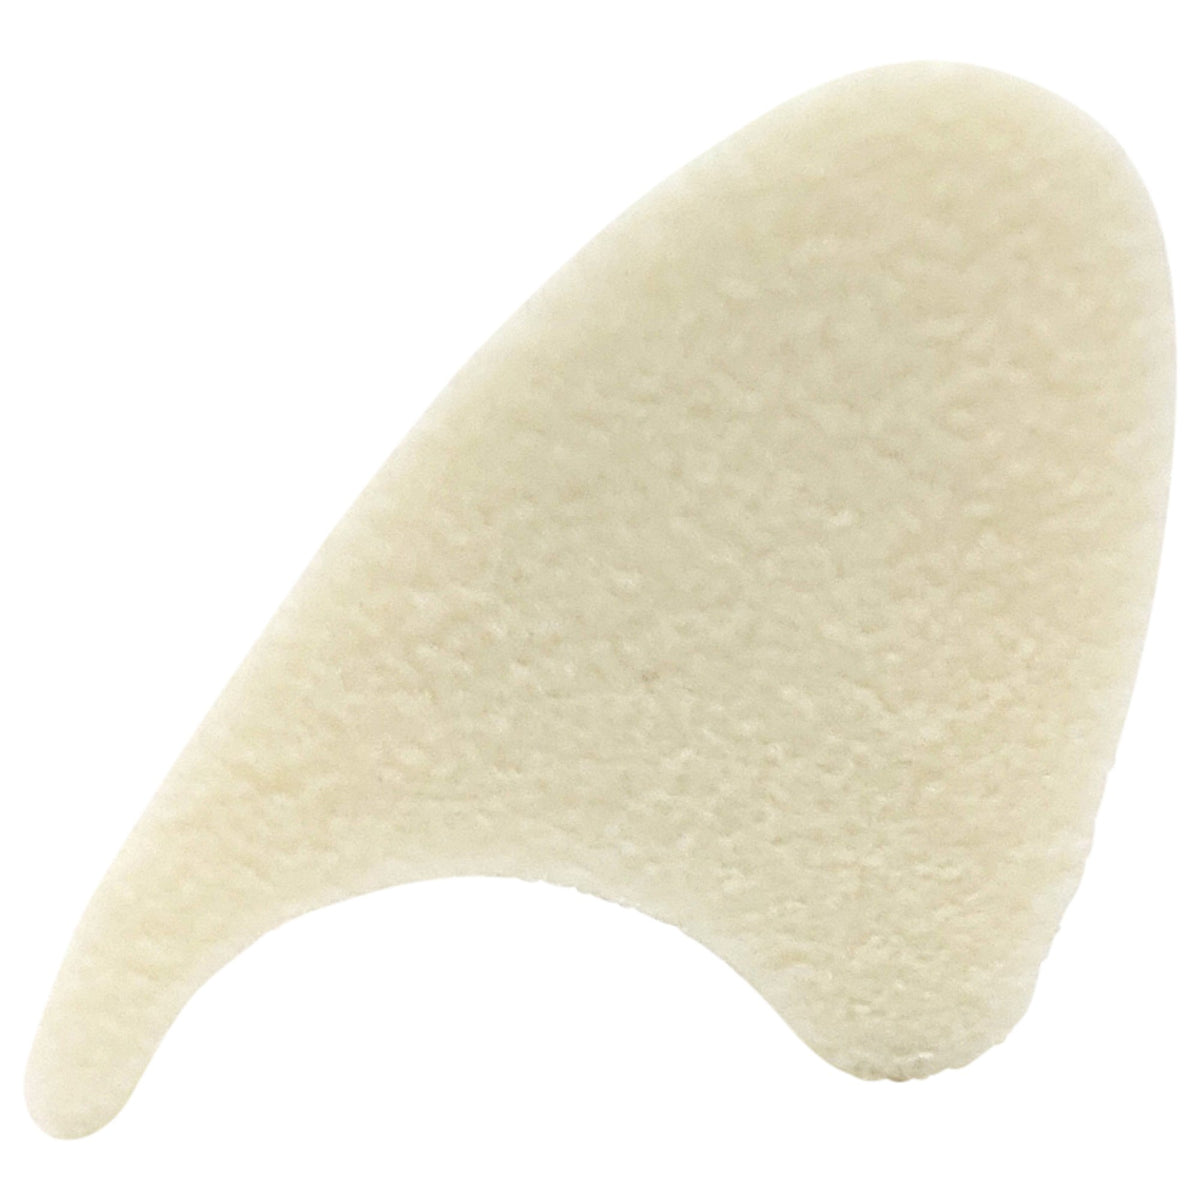 Mars Wellness Full Foam XL Toe Separators 1/2" - Toe Spacers for Corn, Blisters, and Hammer Toe Relief - Bulk Pack of 100 Toe Pads - Mars Med Supply